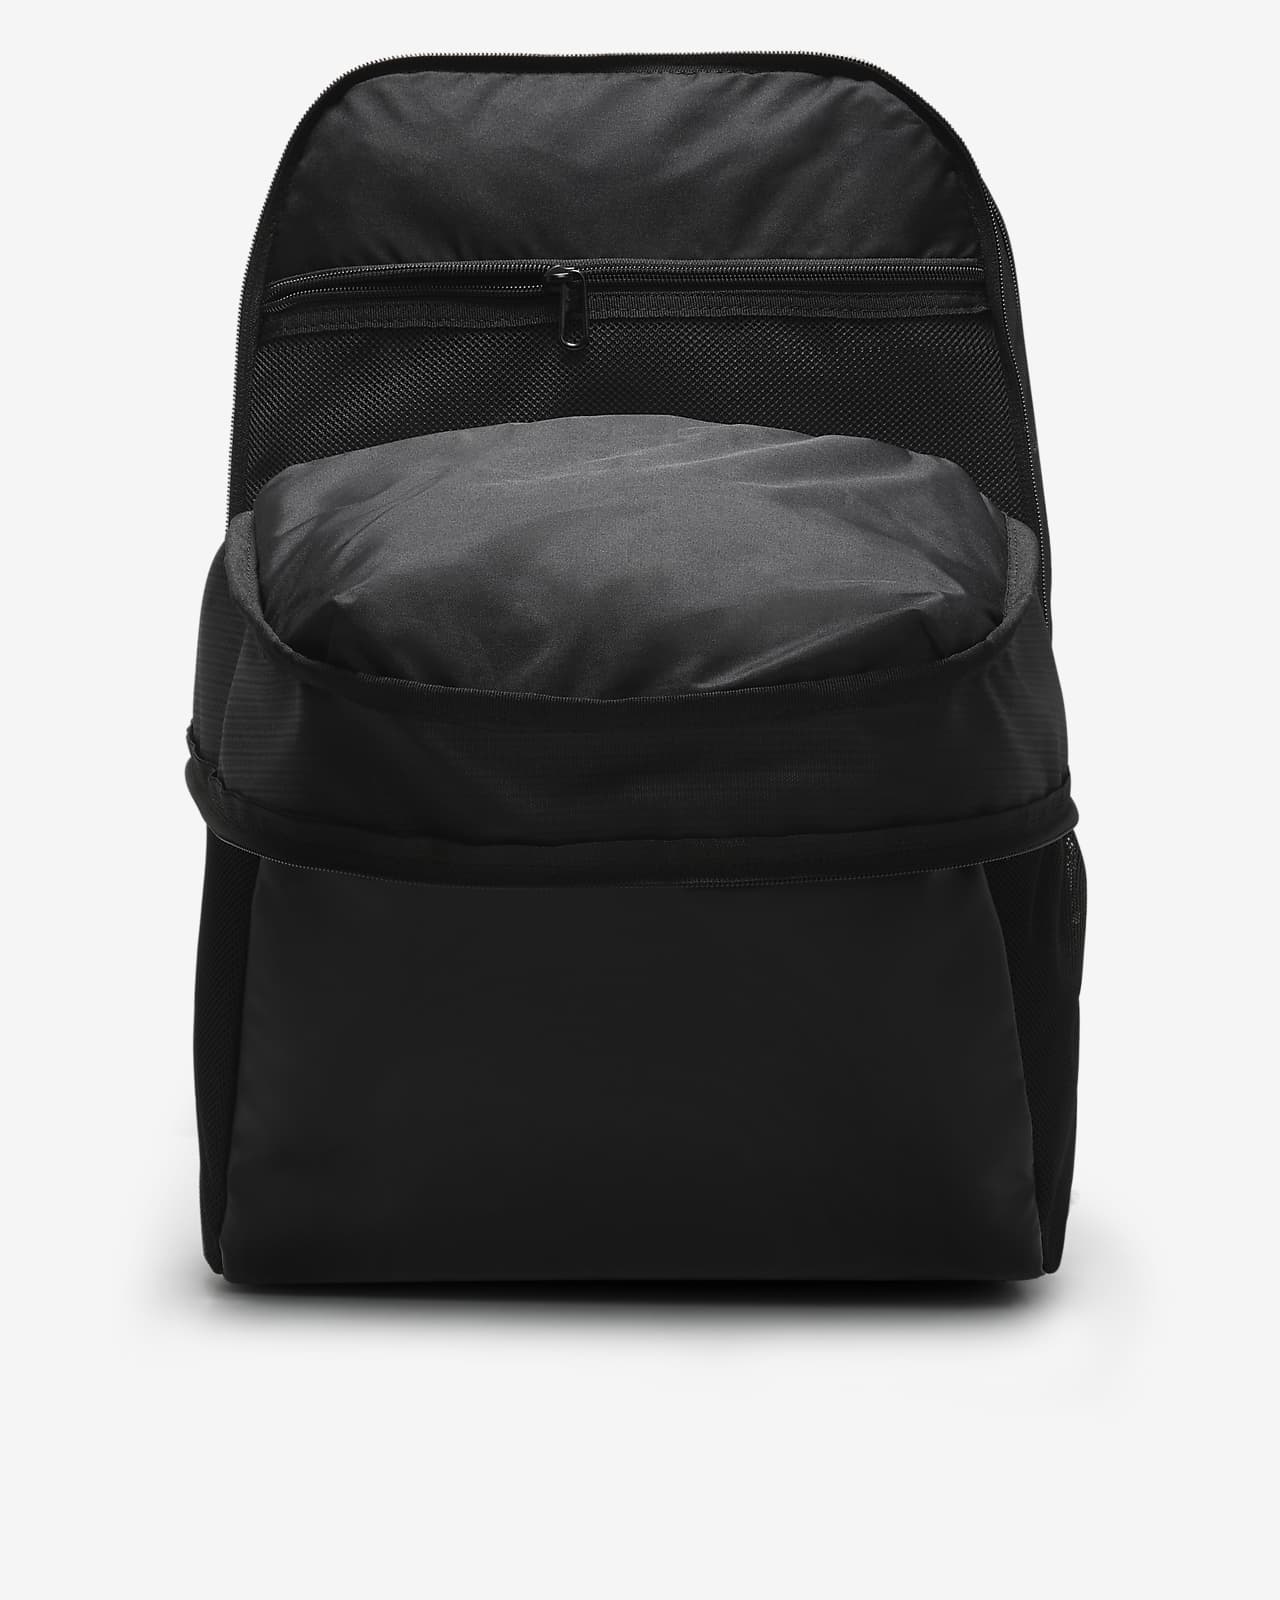 Nike Brasilia Backpack Black/White, £33.00